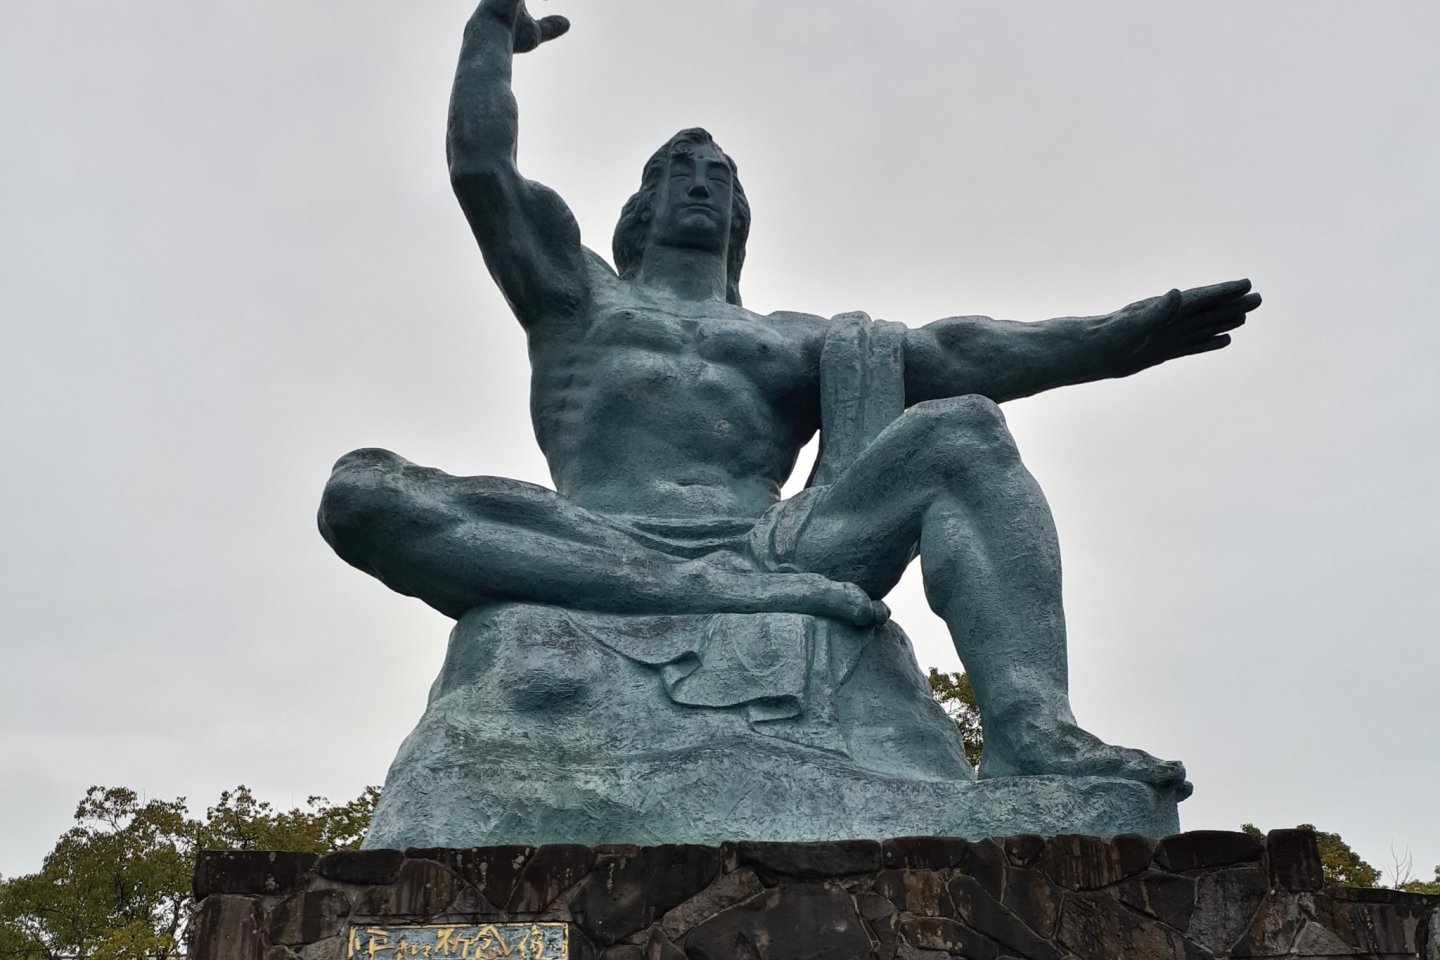 The famous Peace Statue by Kitamura Seibo